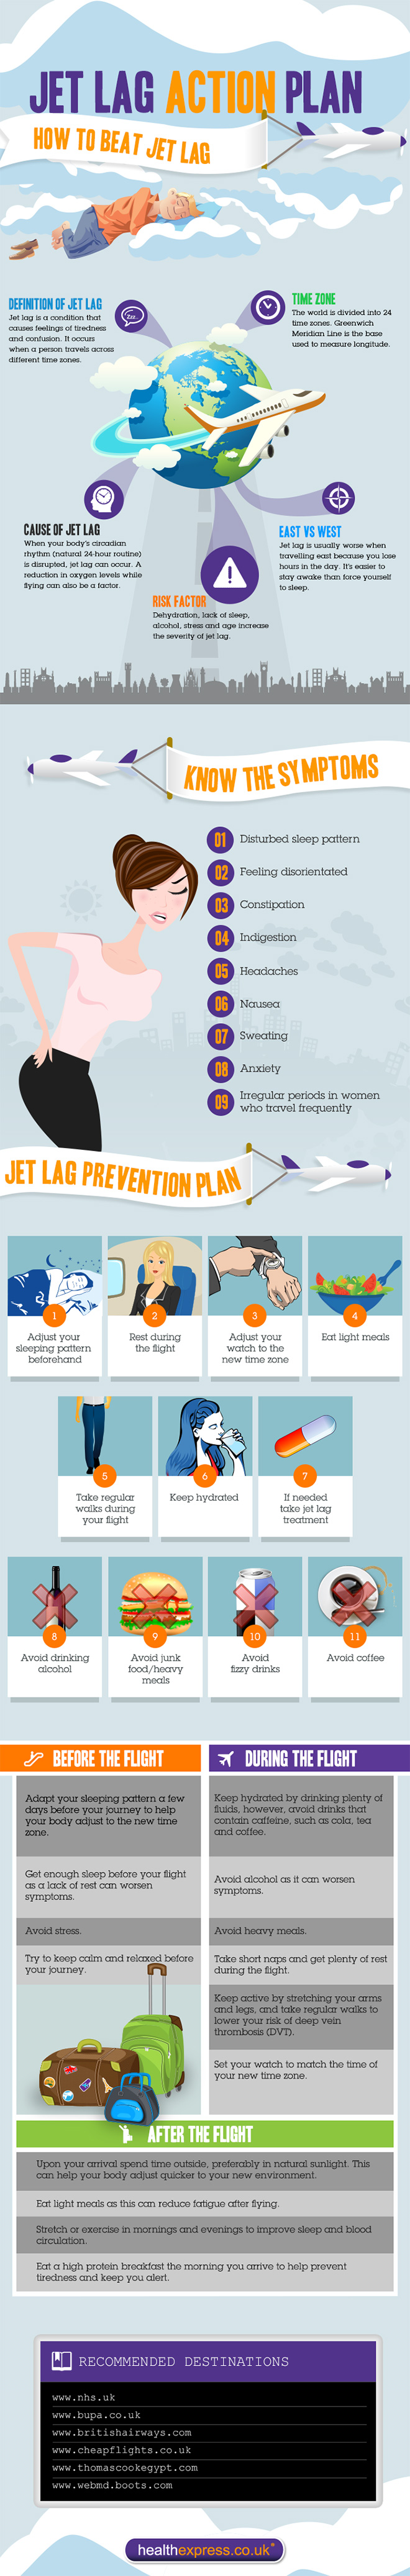 Jet Lag Action Plan - How To Beat Jet Lag